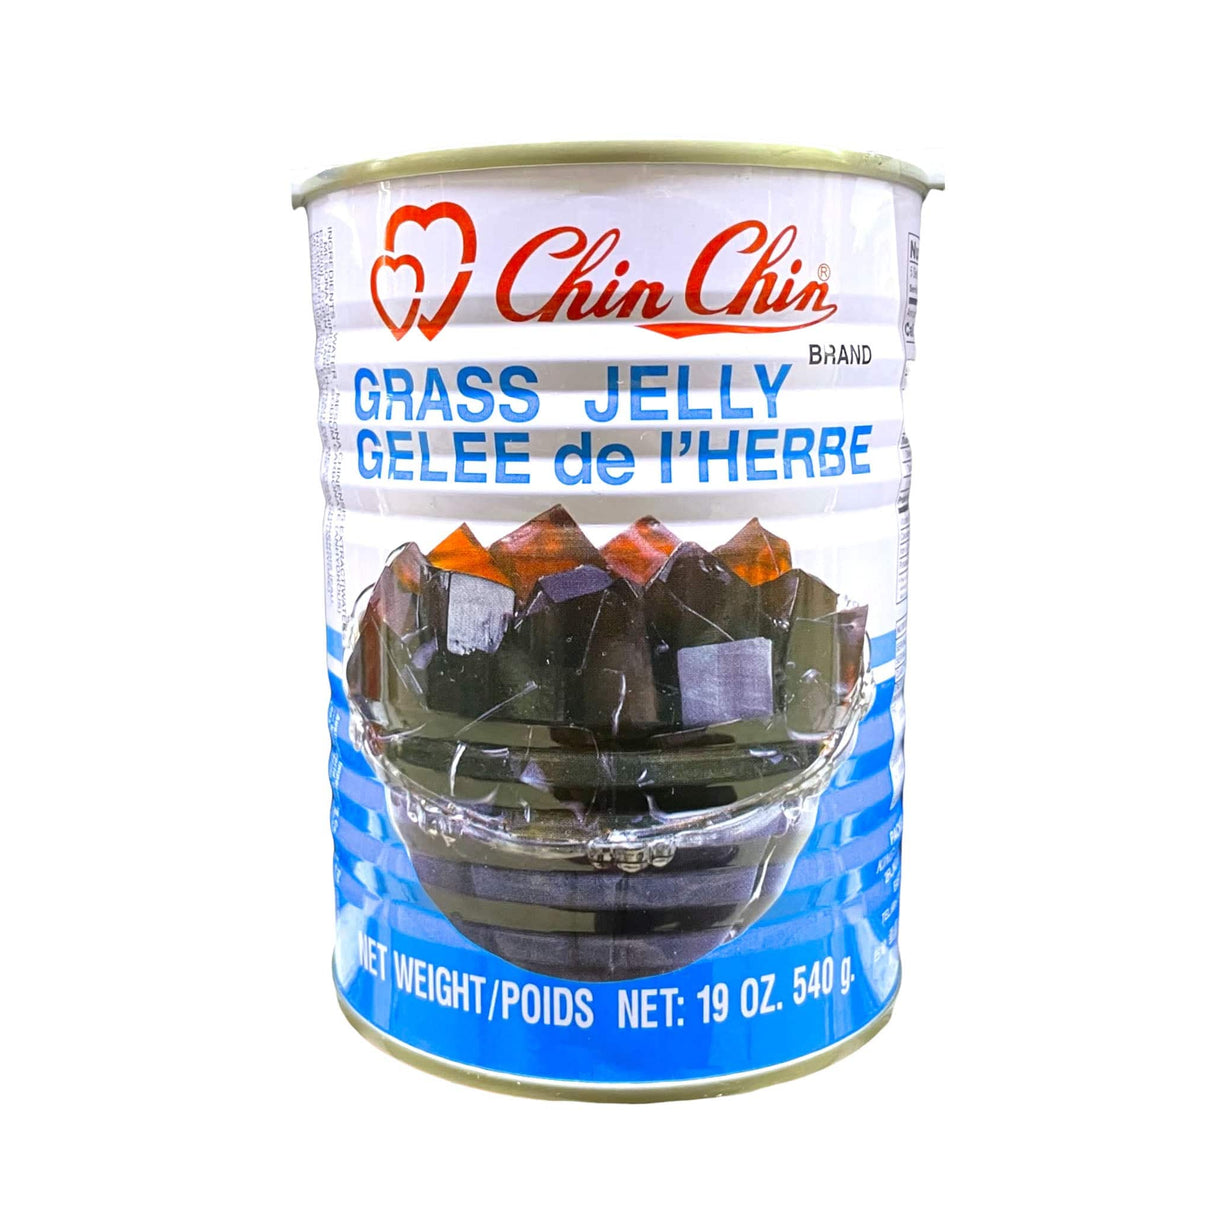 Chin Chin Brand Glass Jelly